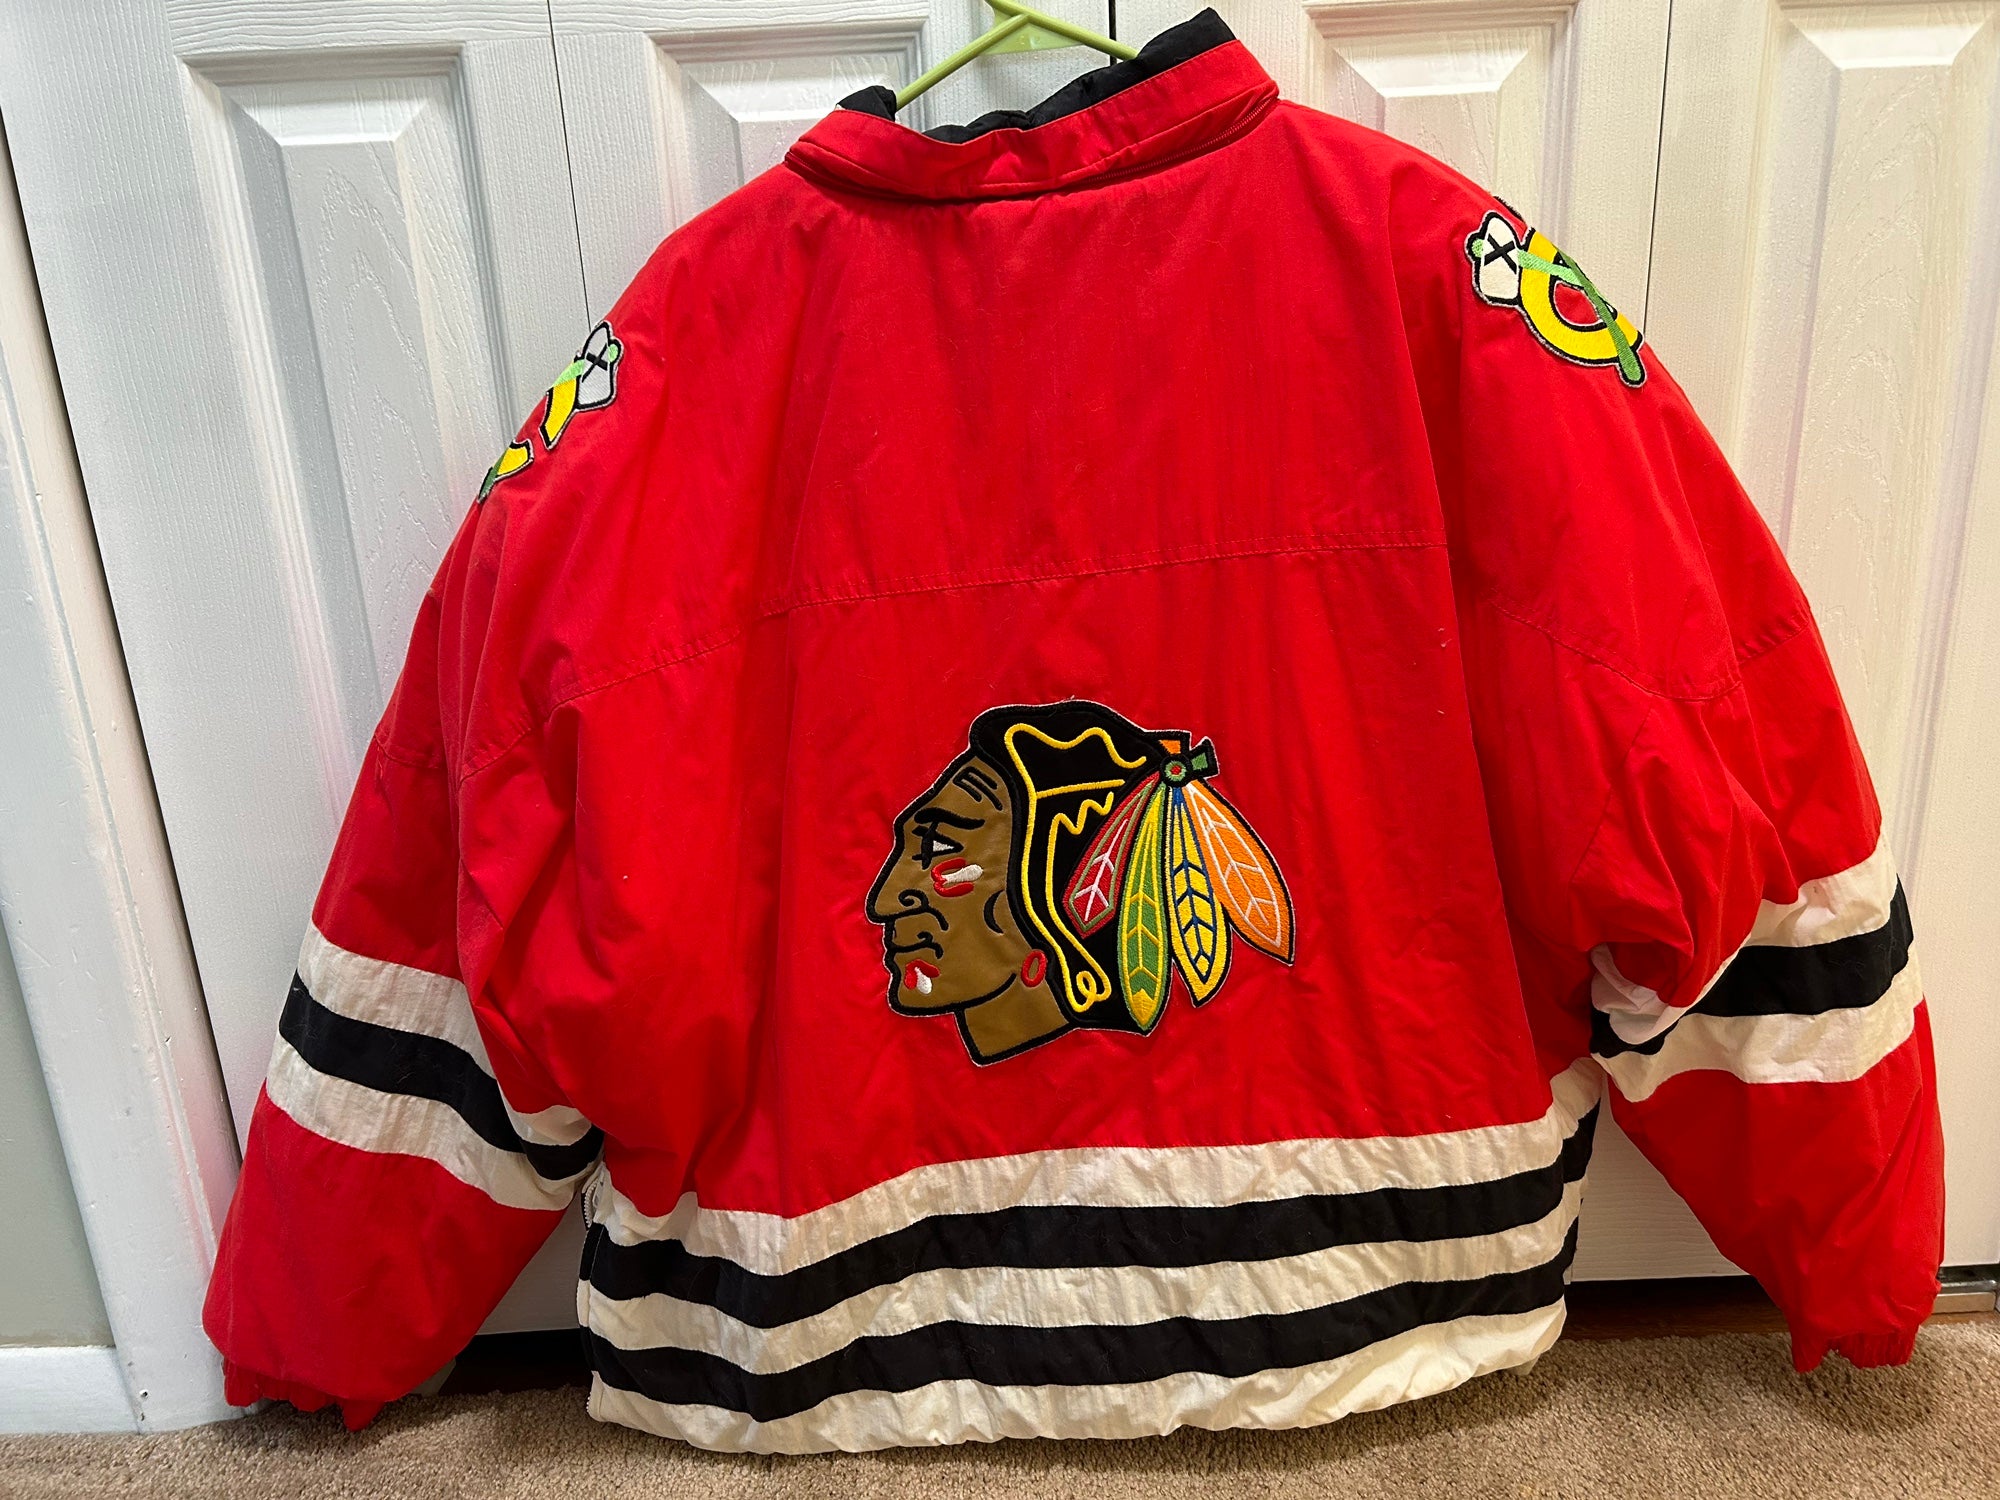 Vintage 90's Starter Chicago Blackhawks Hockey Jersey 